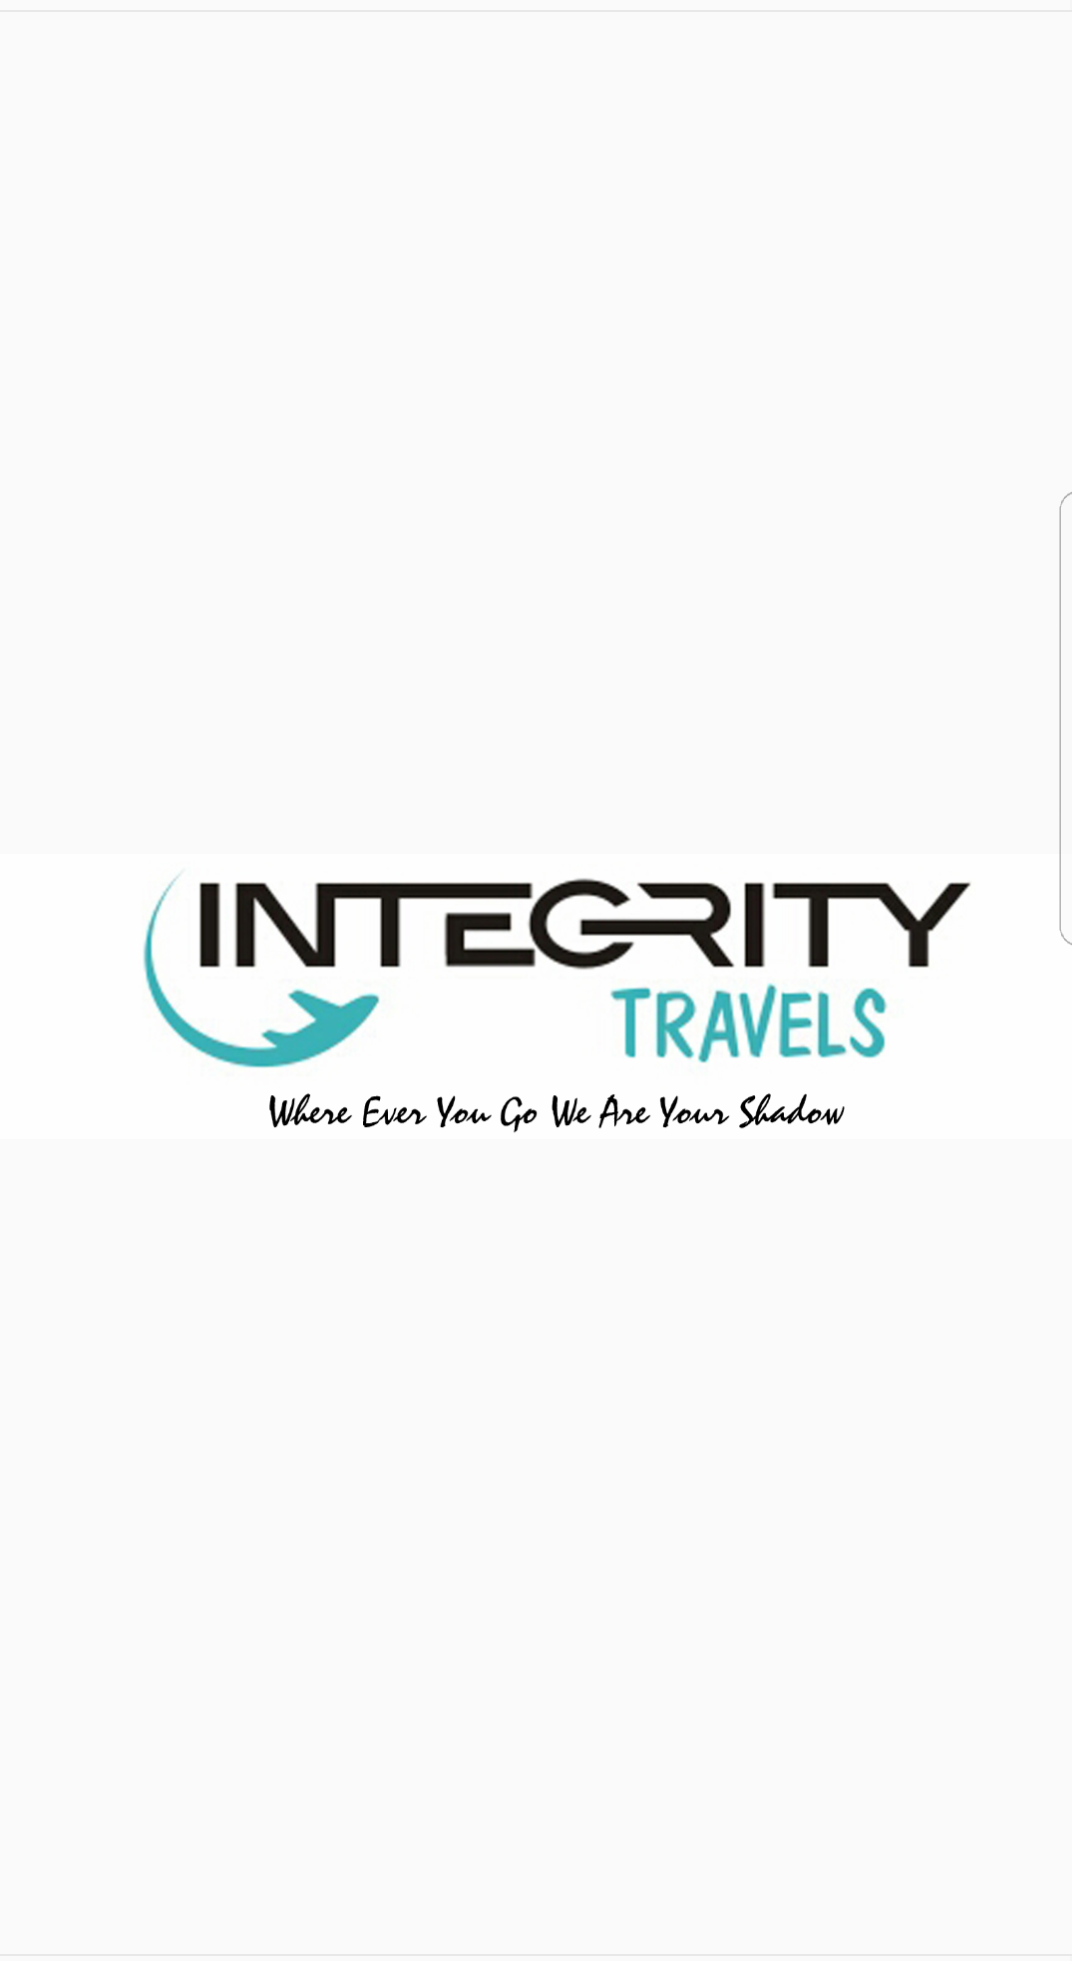 Integrity Travels